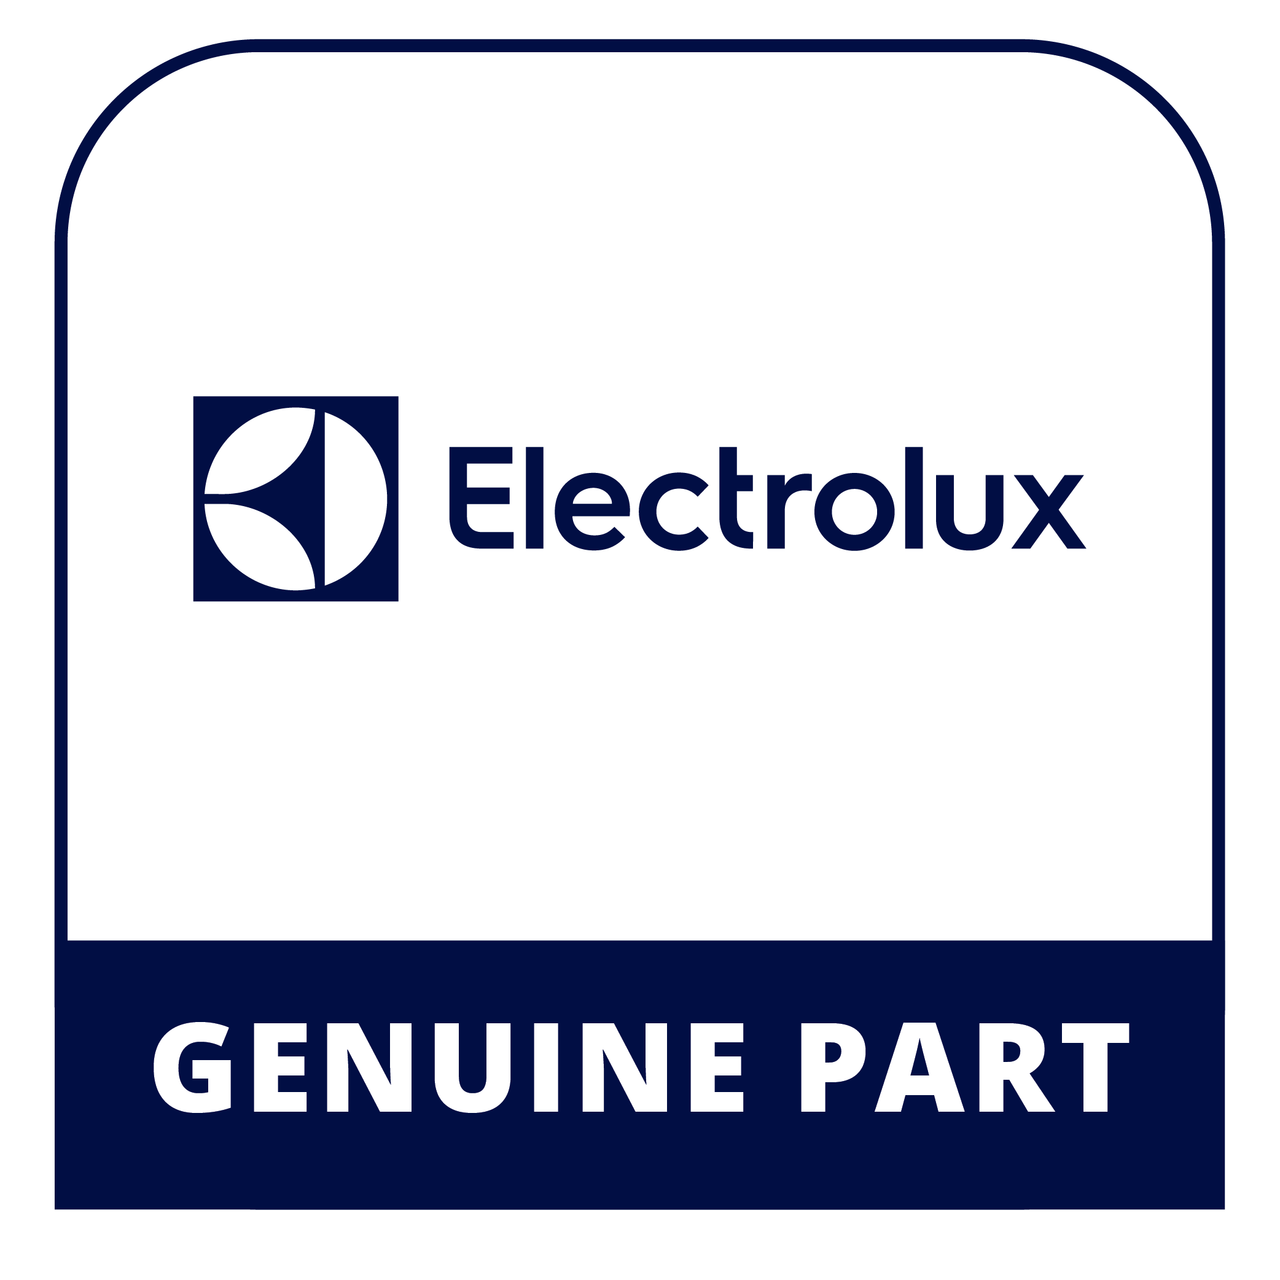 Frigidaire - Electrolux 5304498799 Bracket - Genuine Electrolux Part